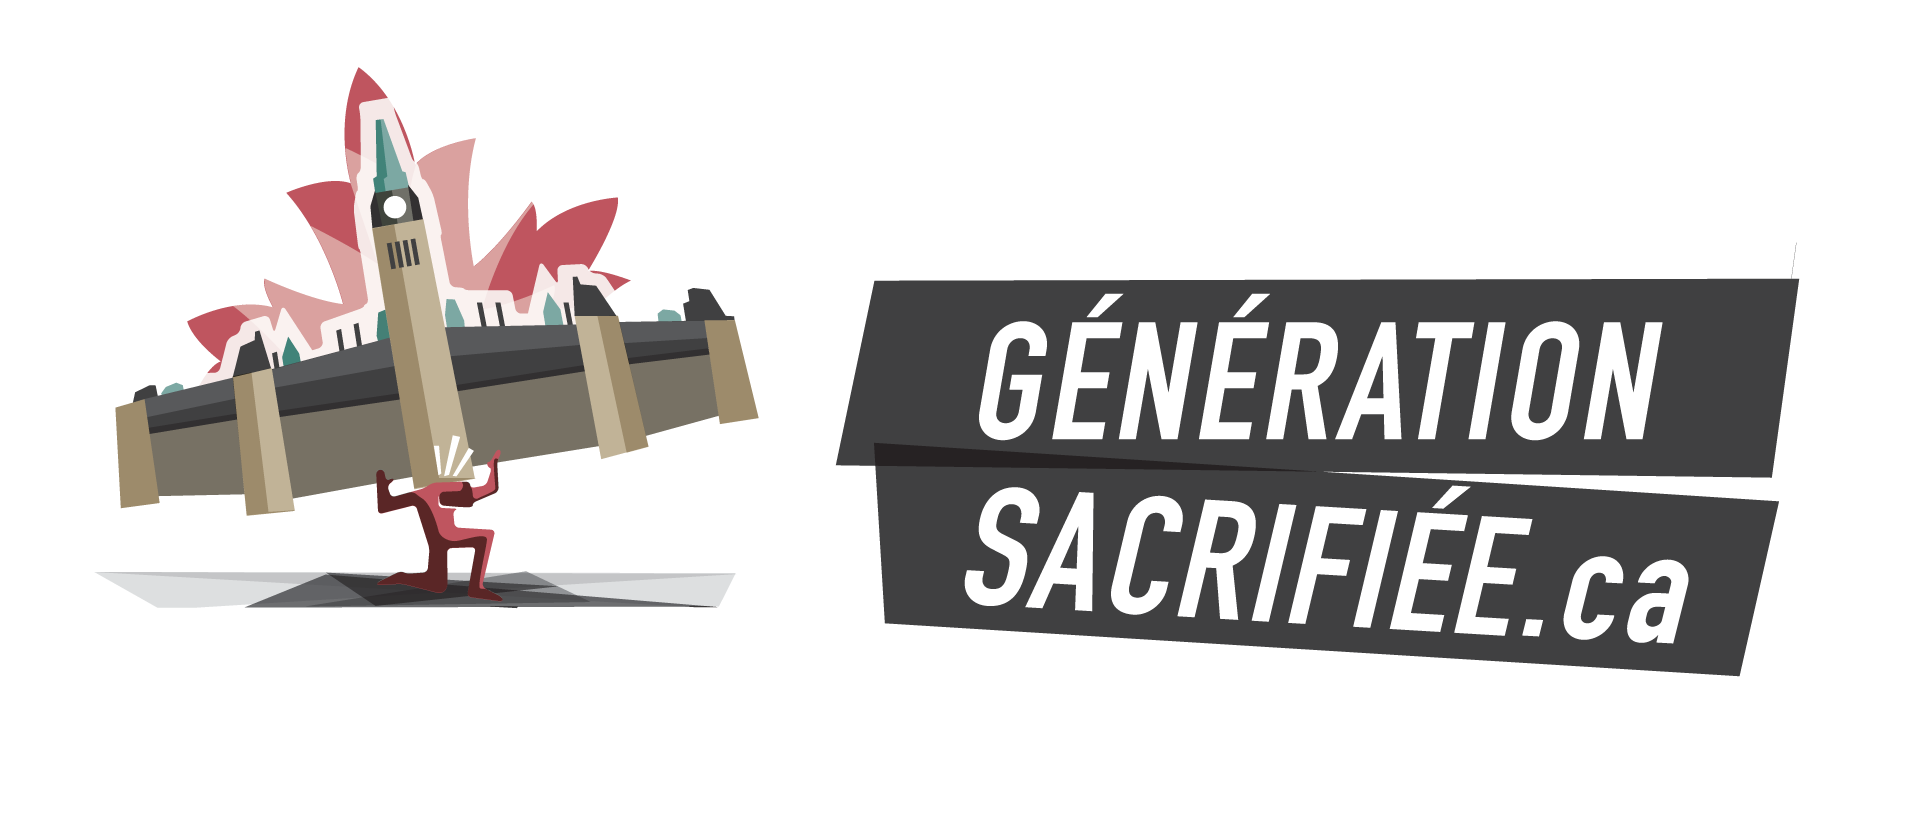 Generation Sacrifiee